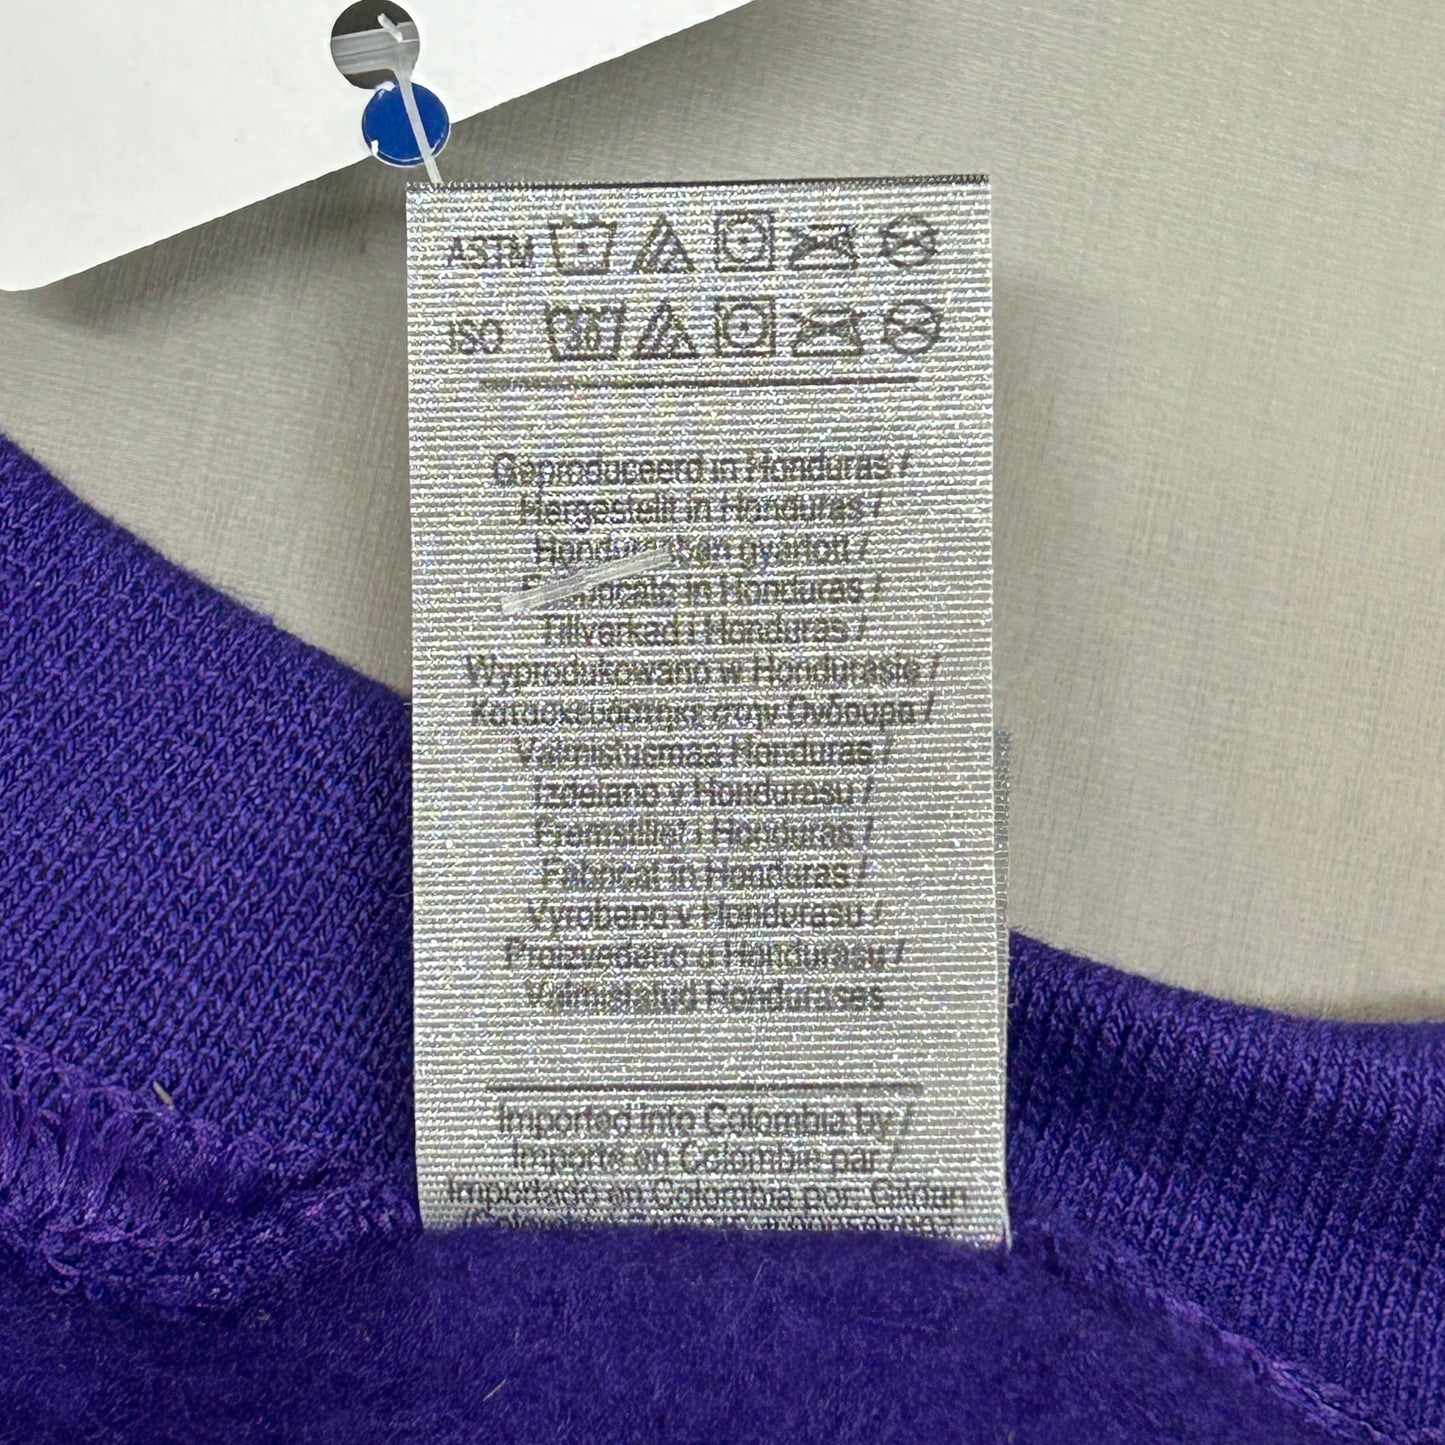 GILDAN College of the Holy Cross Heritage Hooded Sweatshirt Hoodie Unisex Sz S Purple (New)